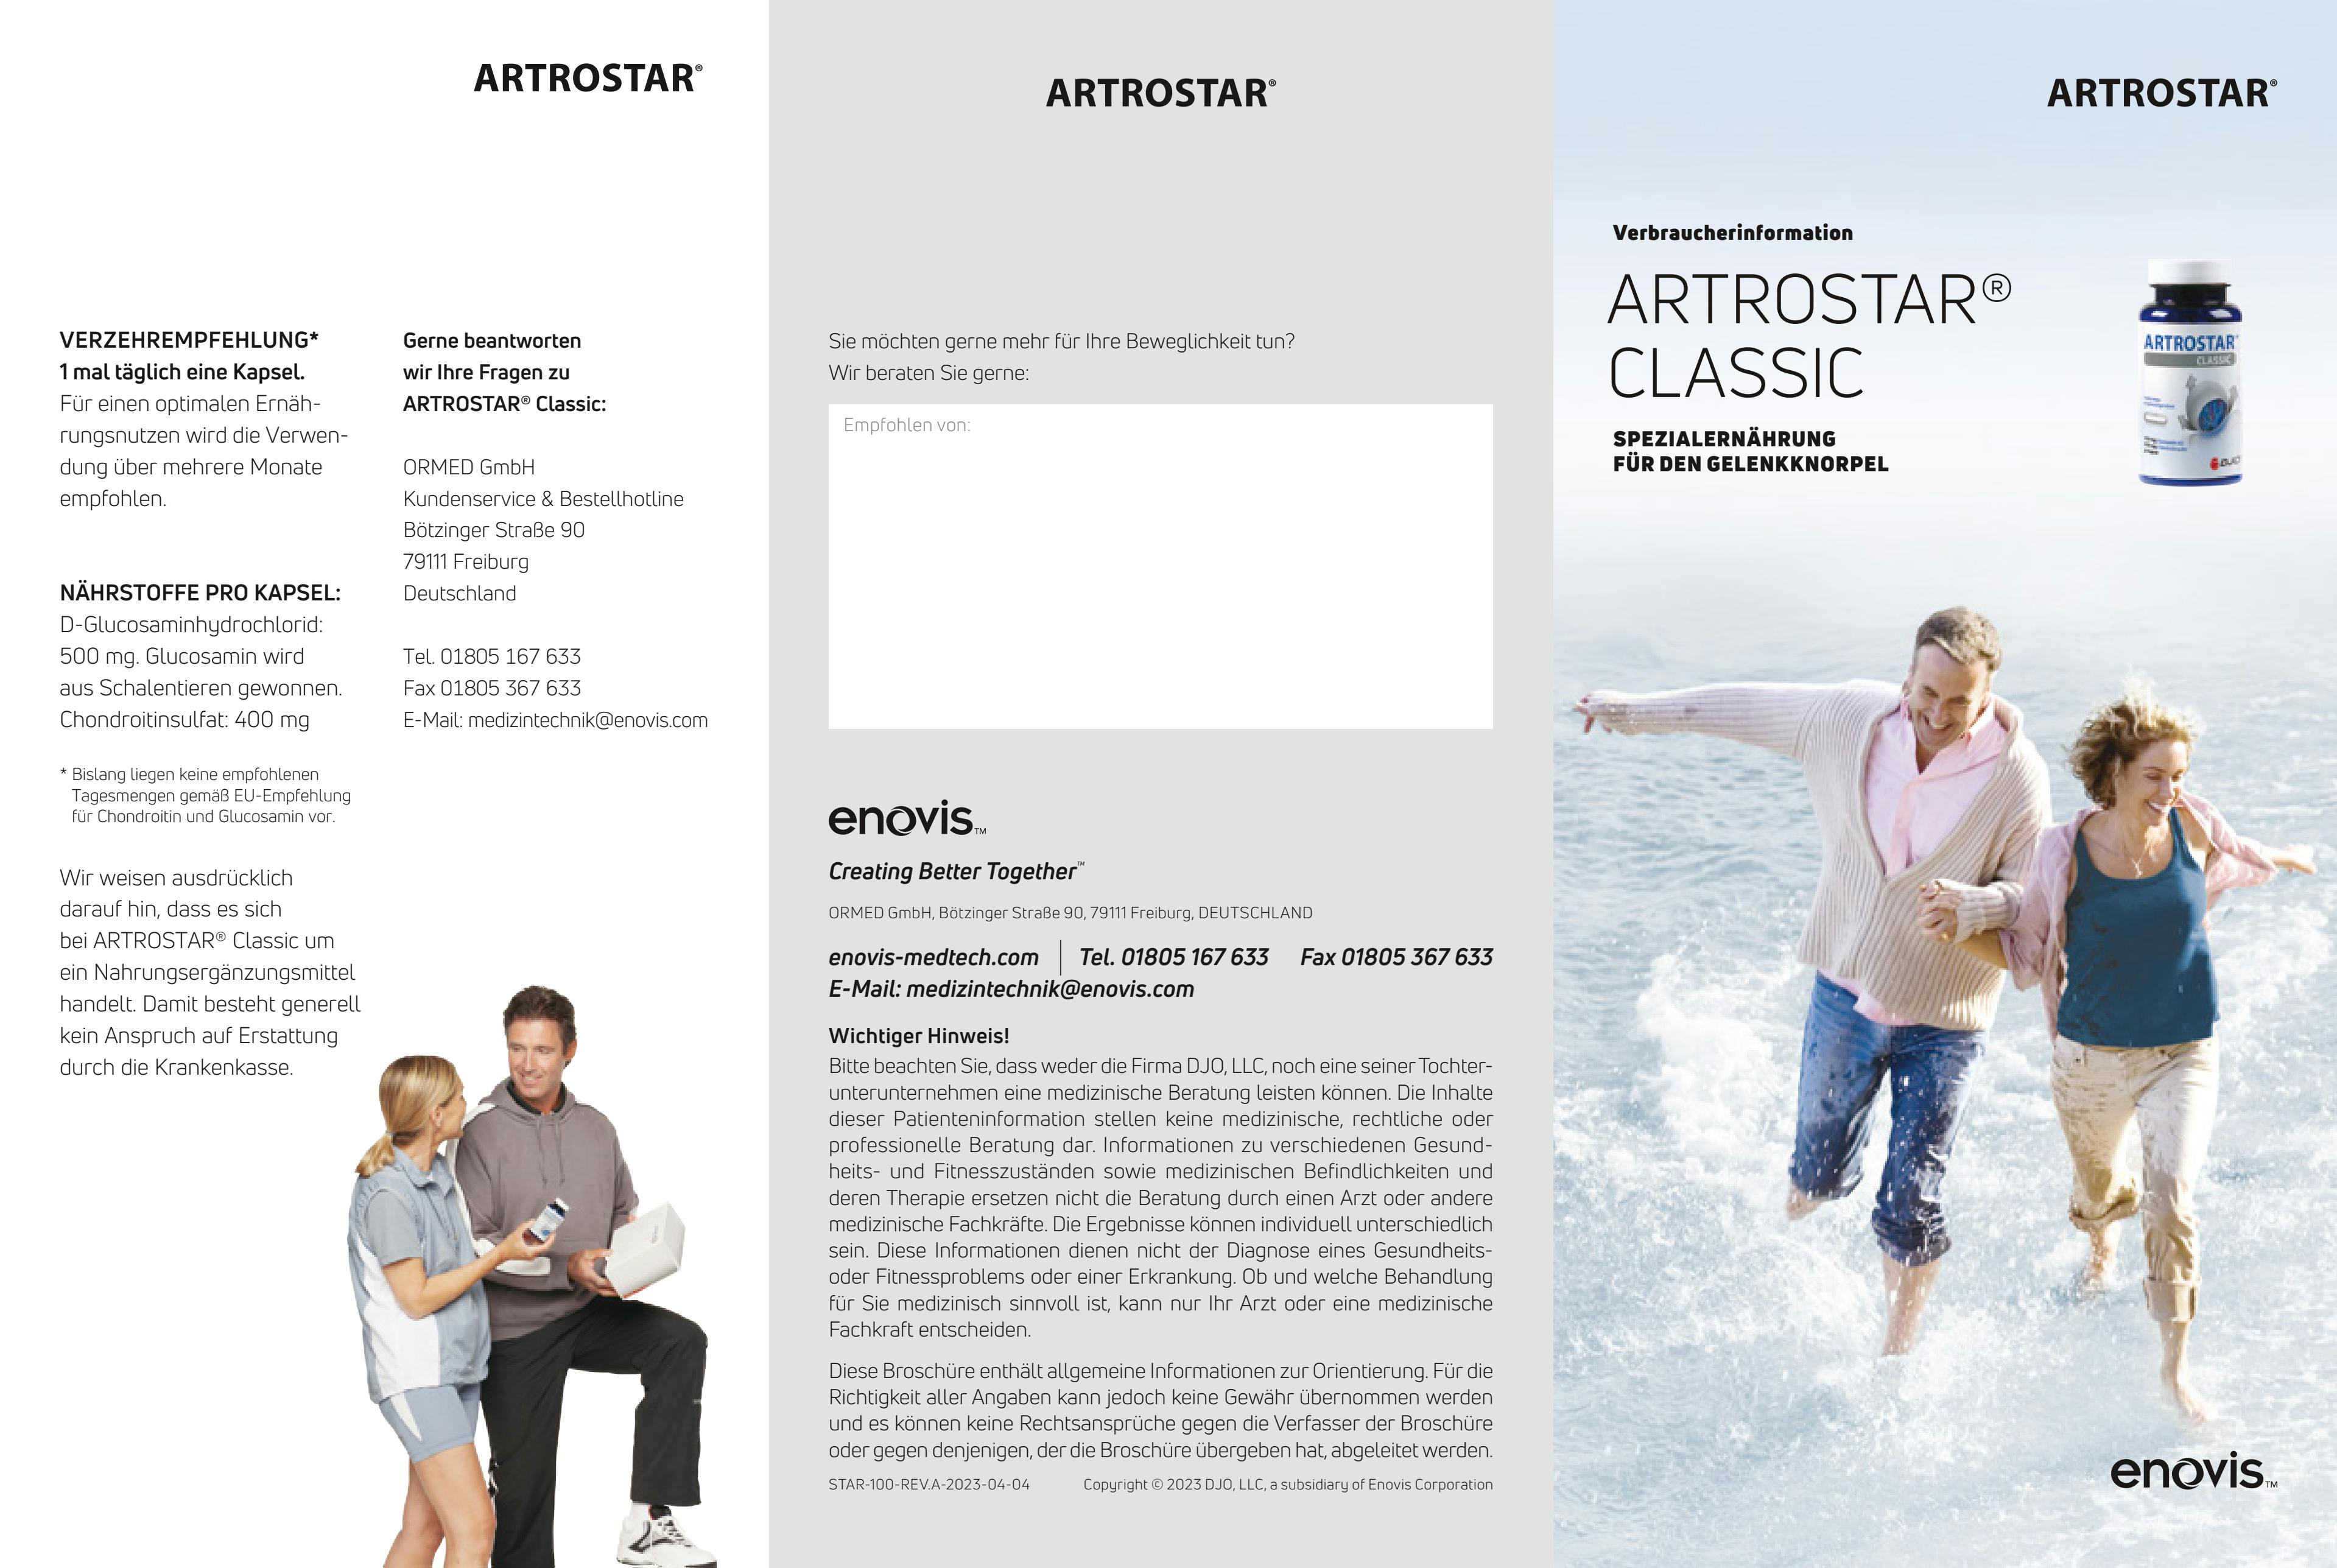 Artrostar Classic_Verbraucherinformation_STAR-100_Revision A_2023-05-15.pdf